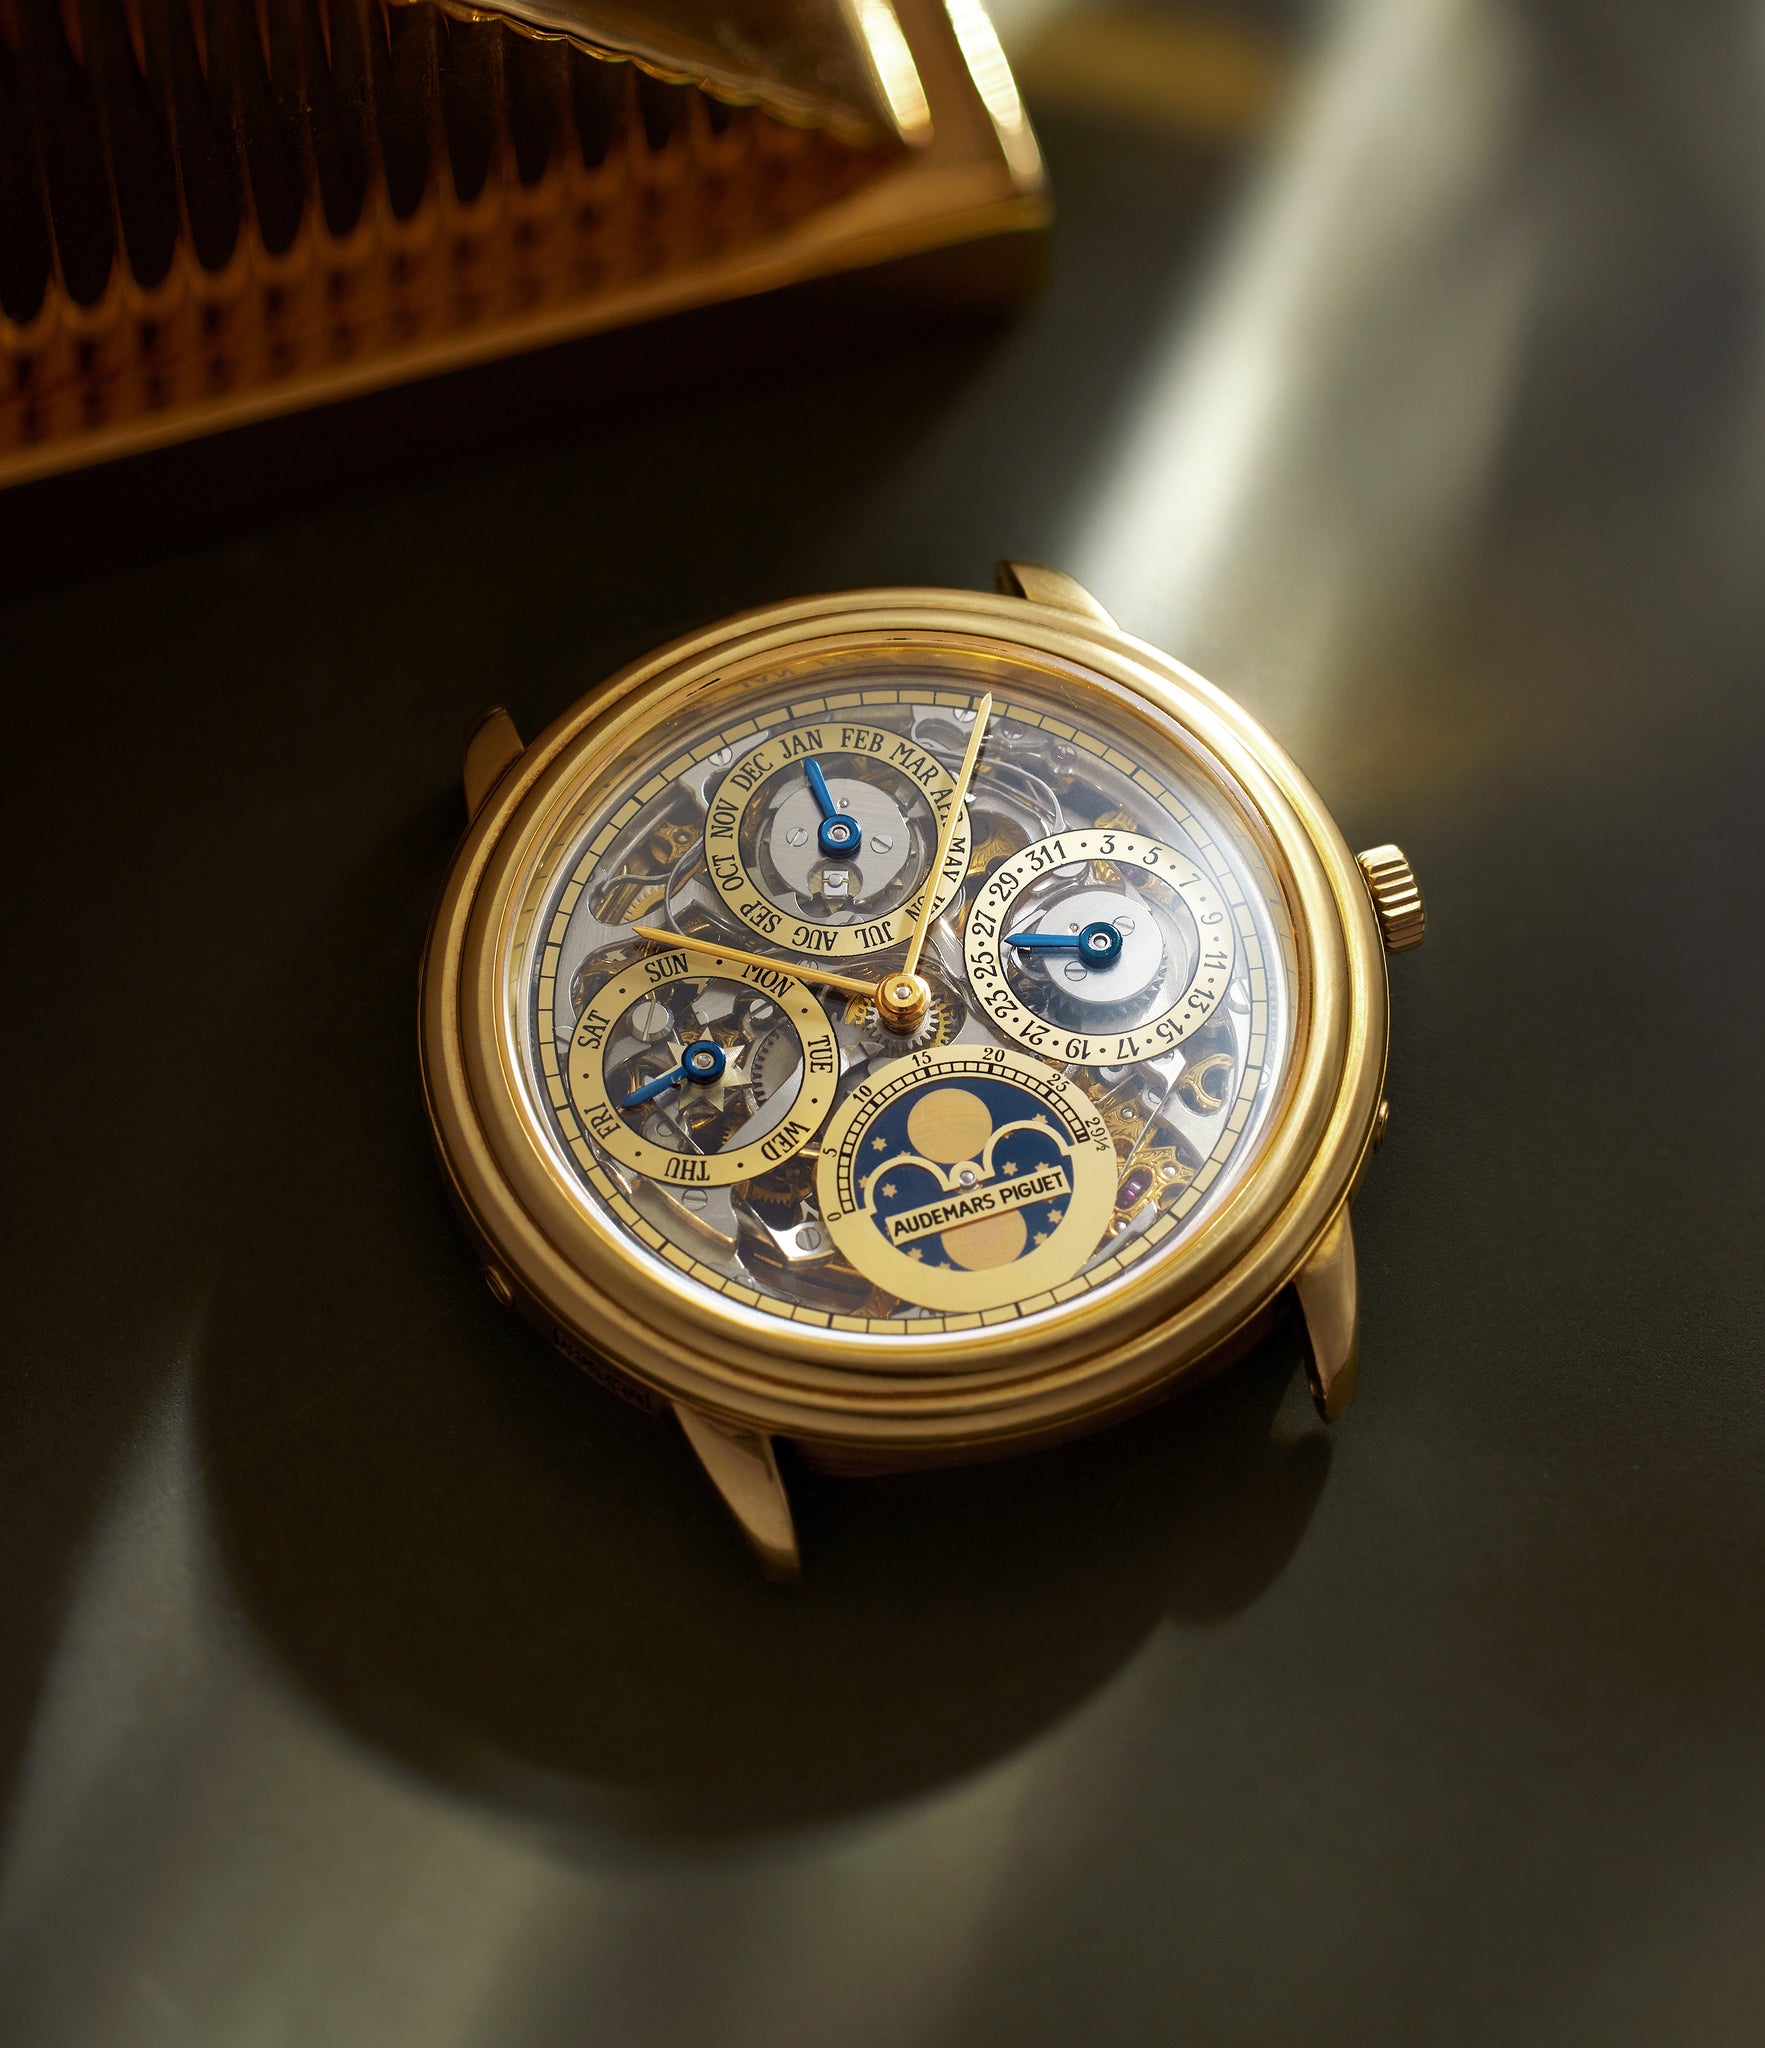 Audemars Piguet Quantième Perpétuel Skeleton 25558/002BA Yellow Gold preowned watch at A Collected Man London